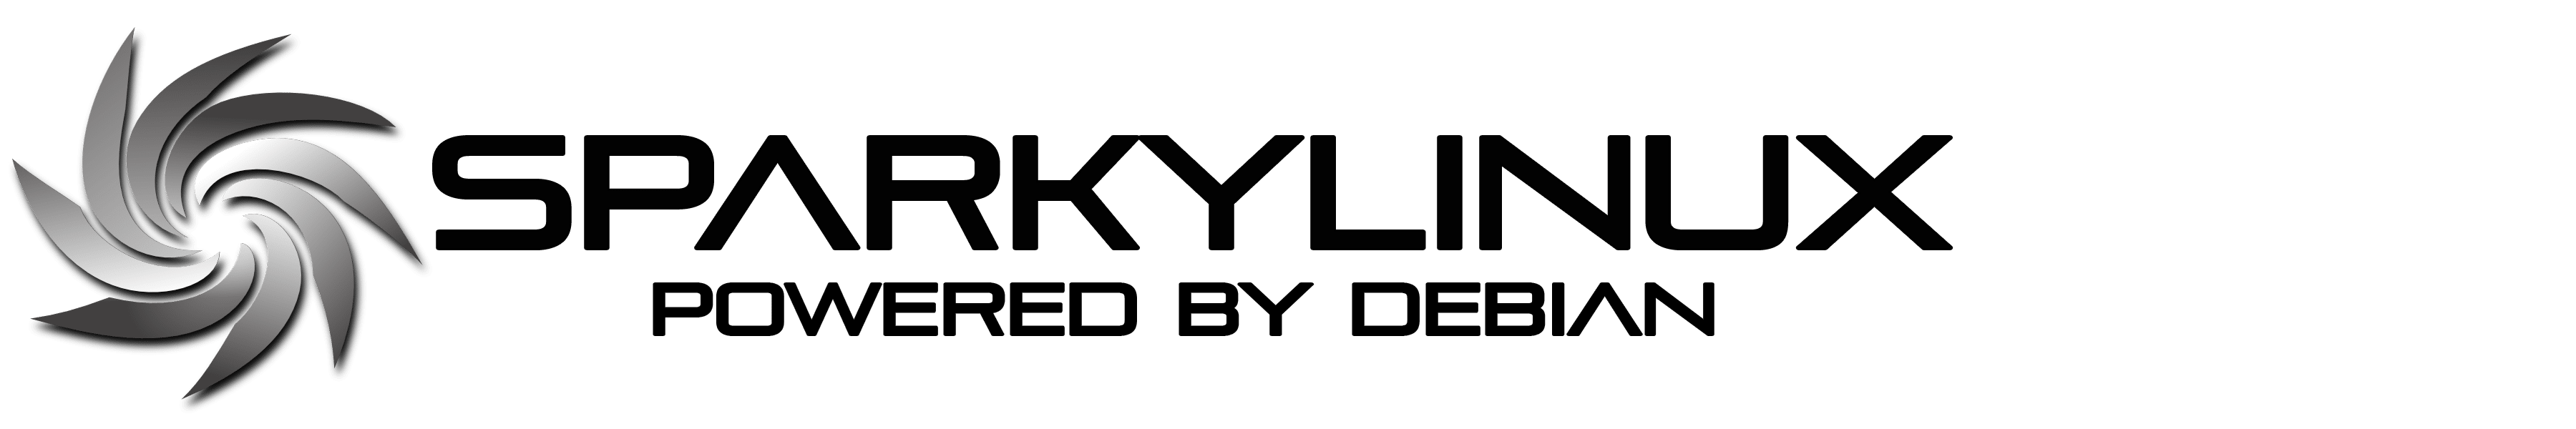 Distribuição SparkyLinux lança versão 5.13